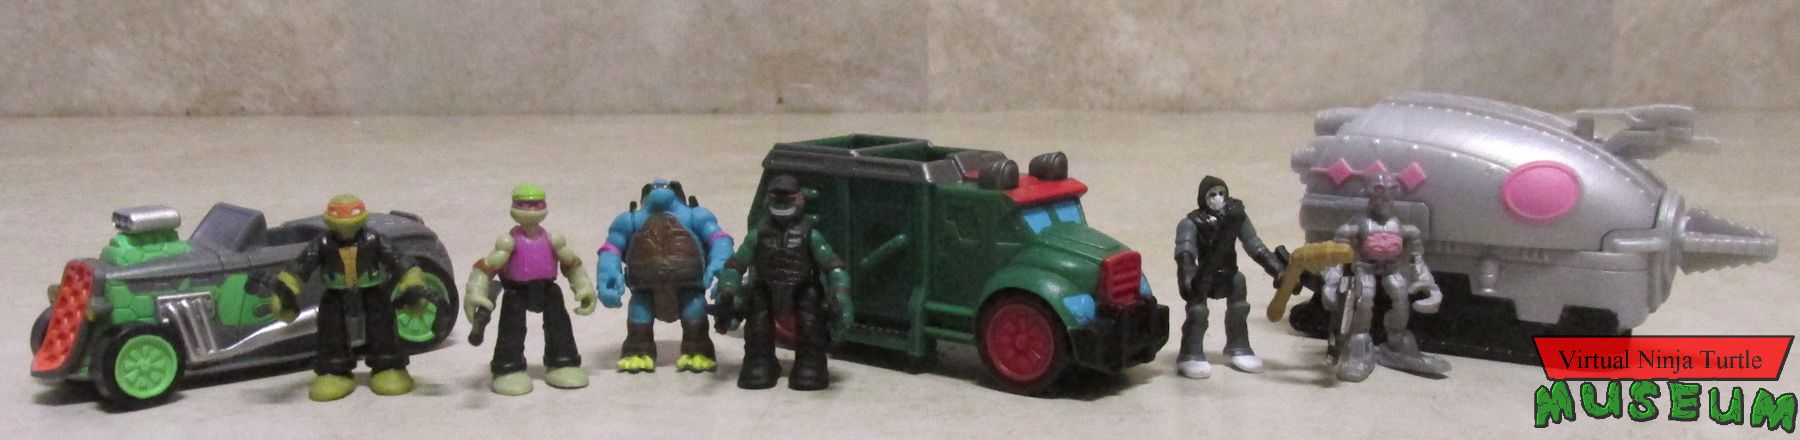 Micro Mutants Vehicle Sets Series 2 group photo